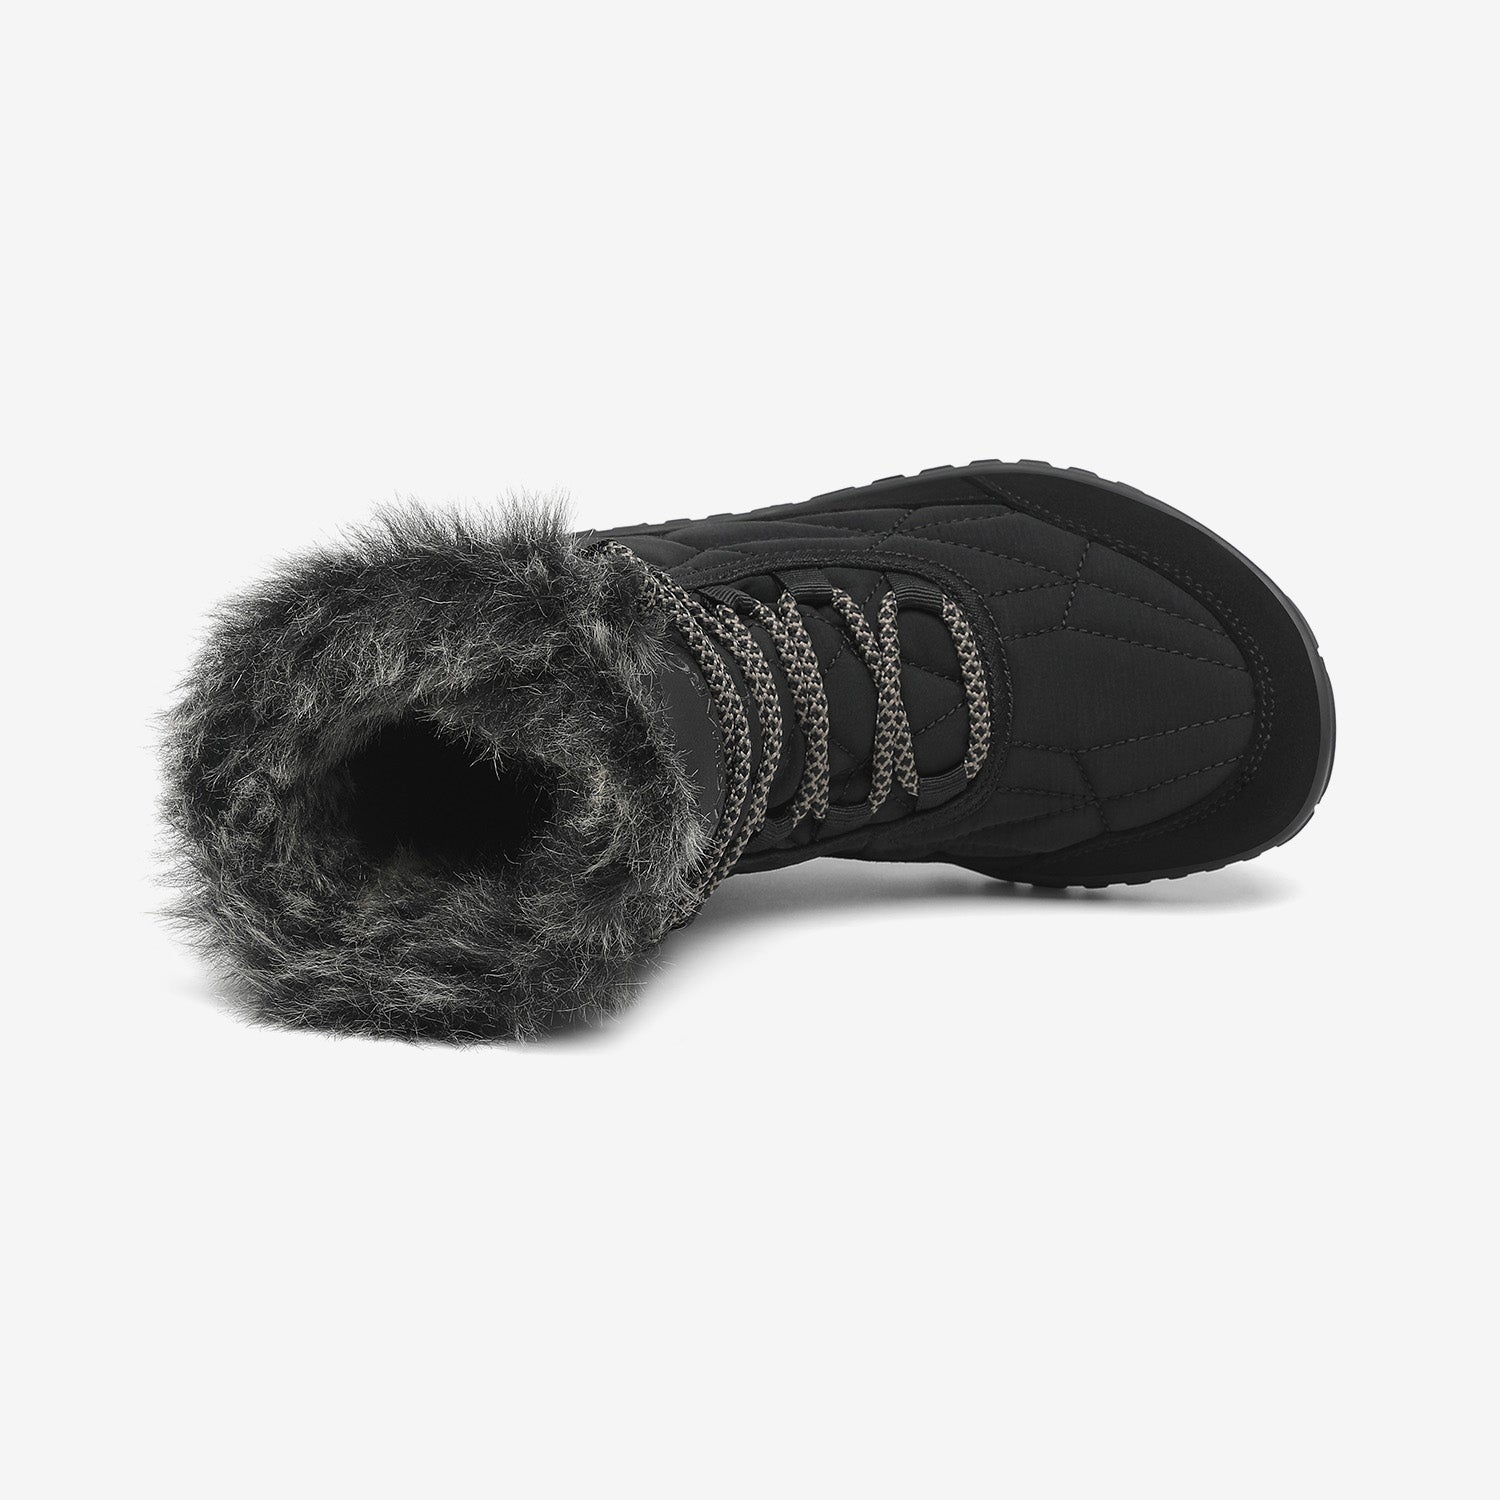 Rise II - Winter Barefoot Boots